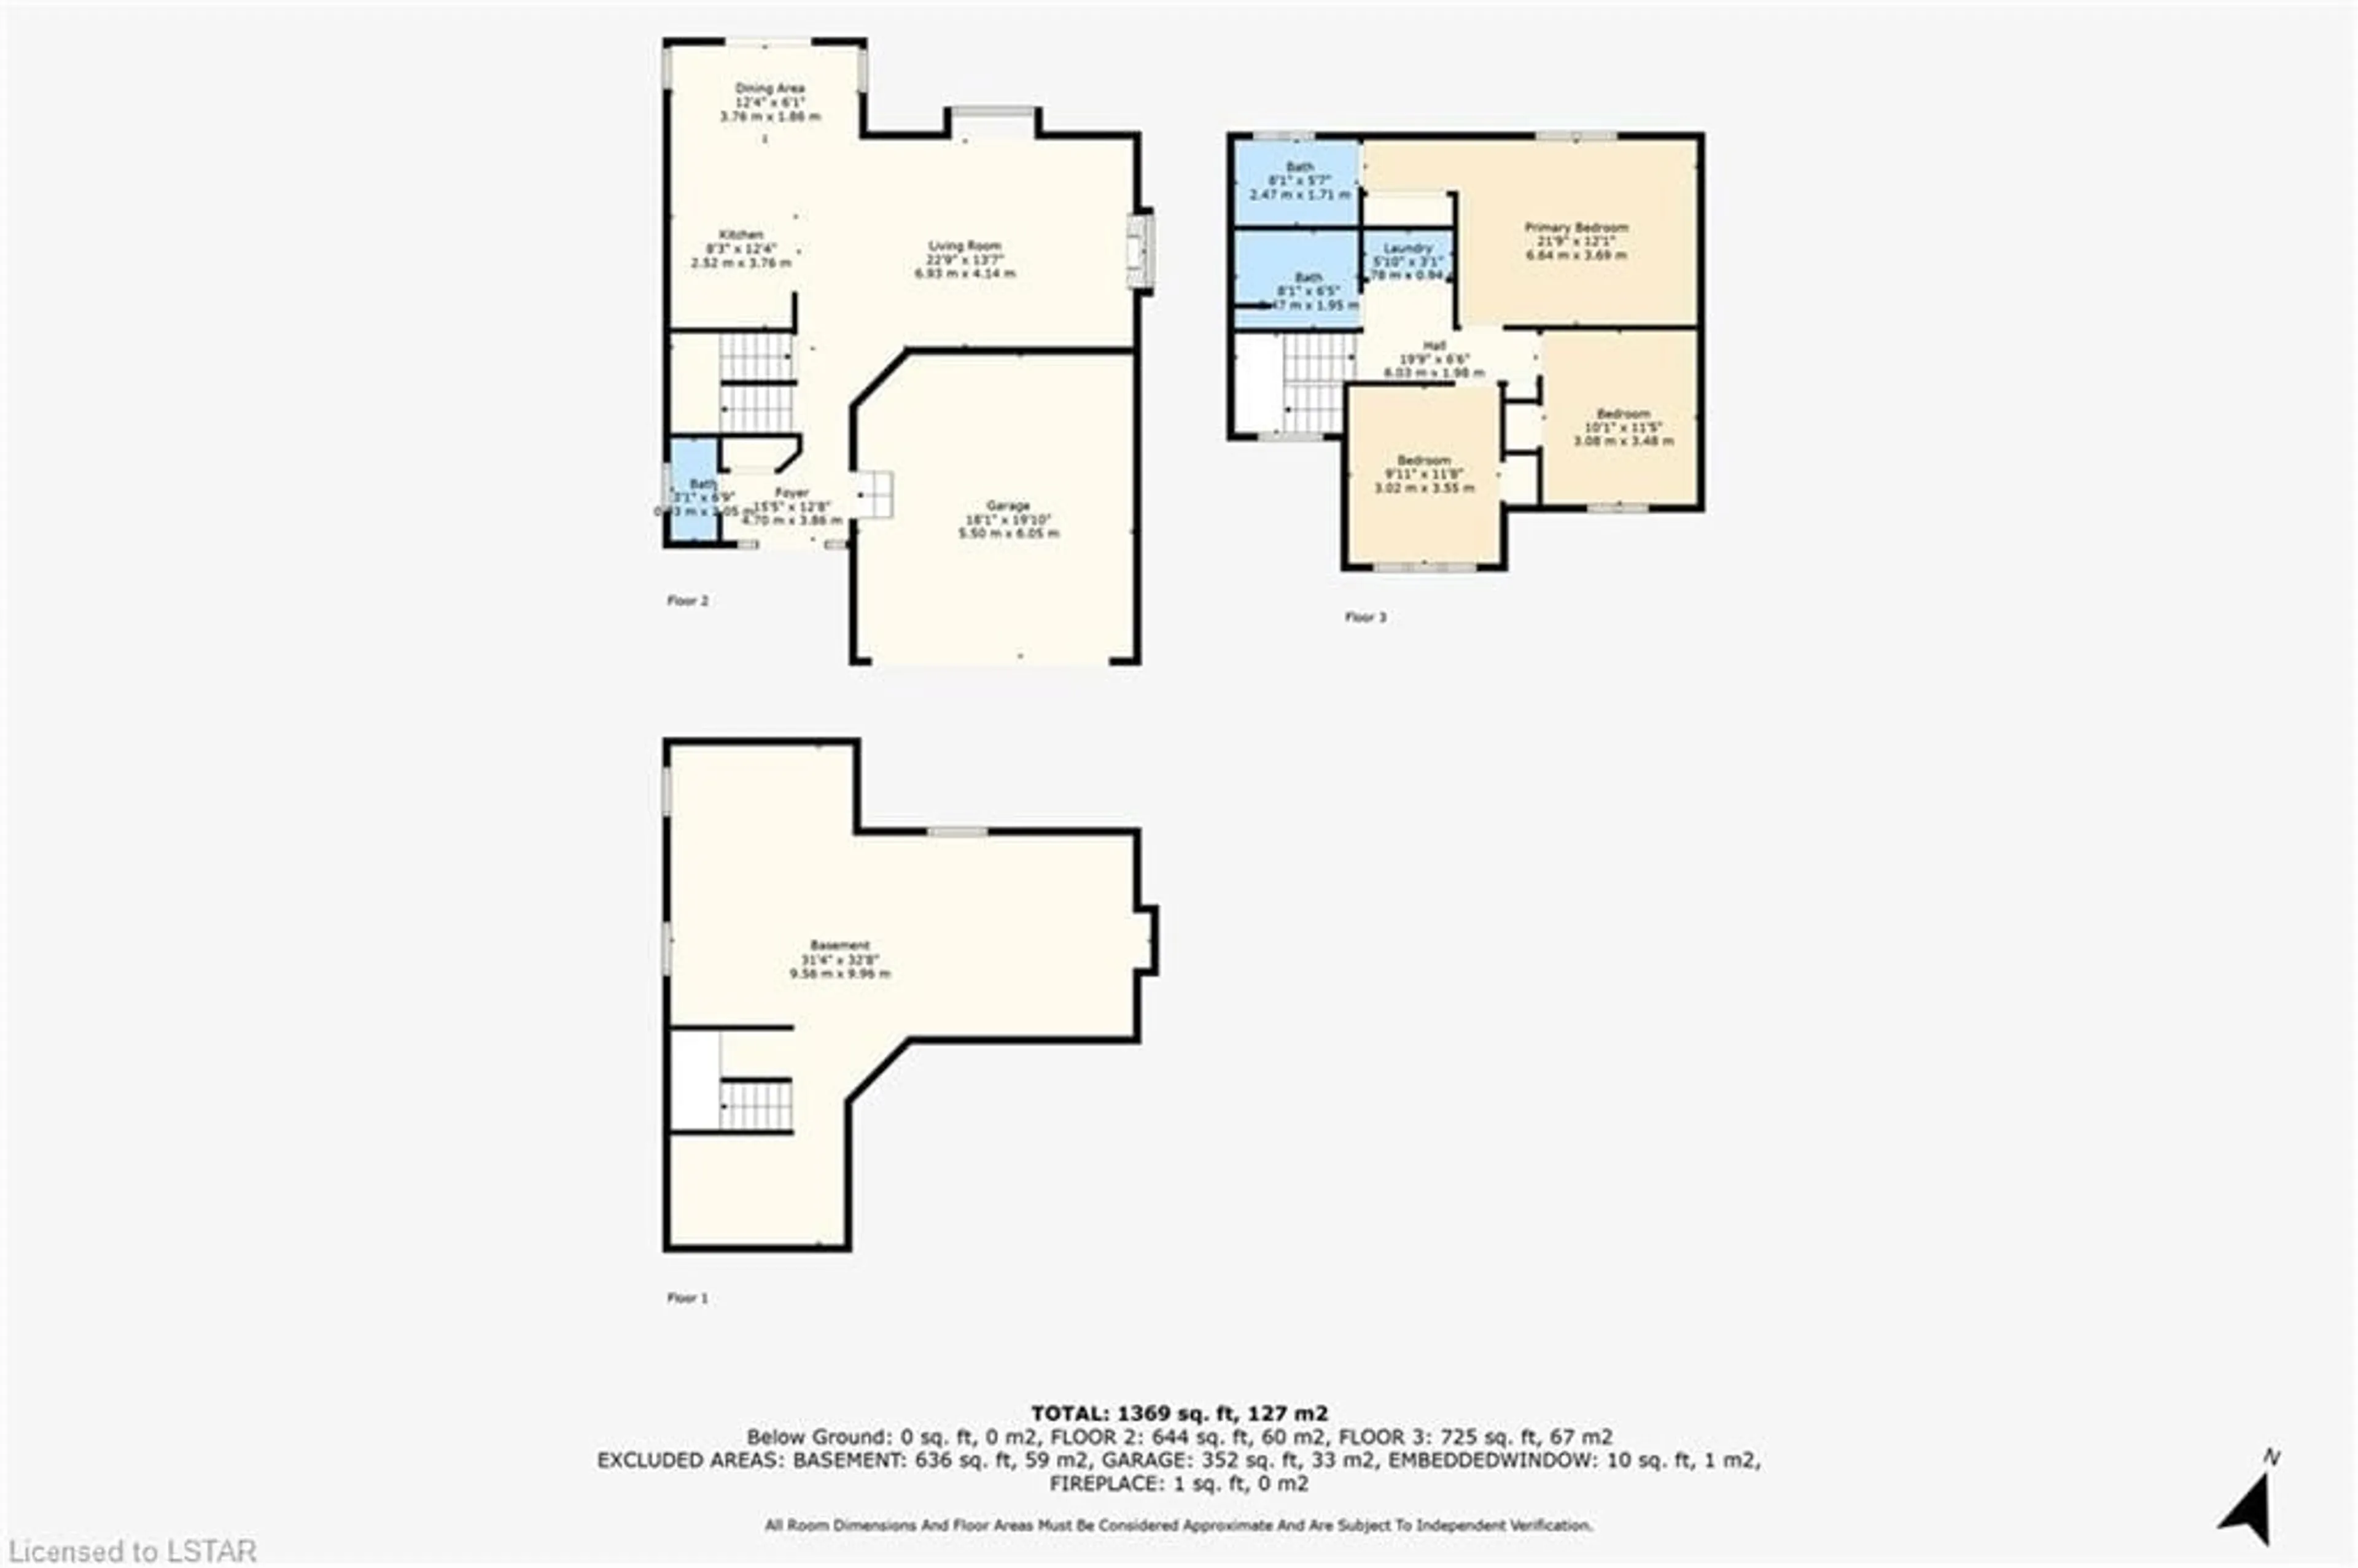 Floor plan for 1697 Healy Rd, London Ontario N6G 5P1